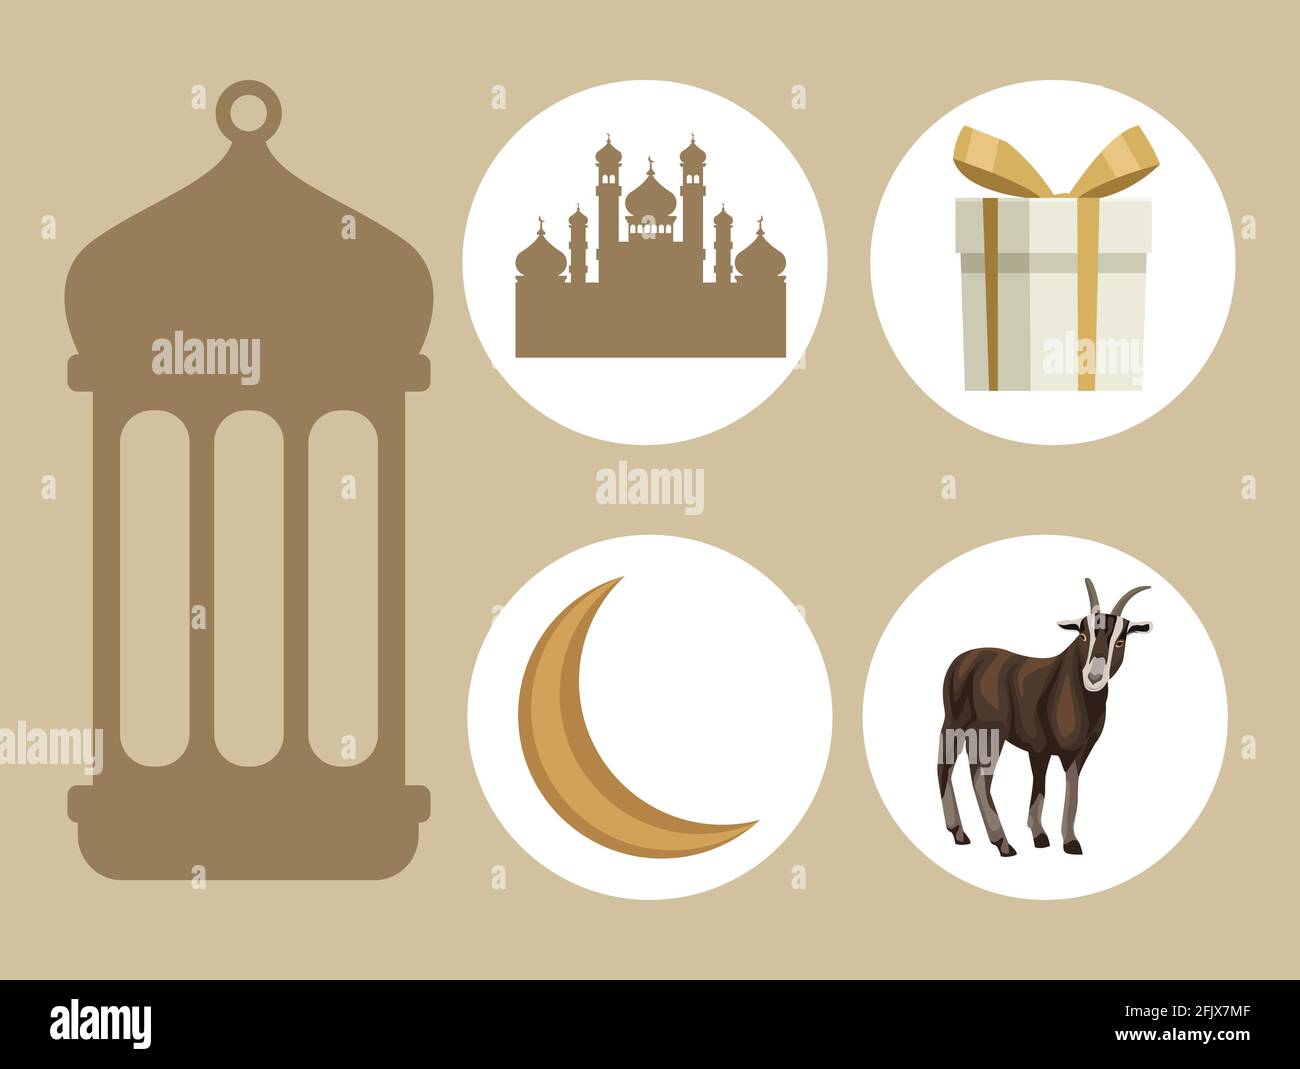 five eid mubarak icons Stock Vector